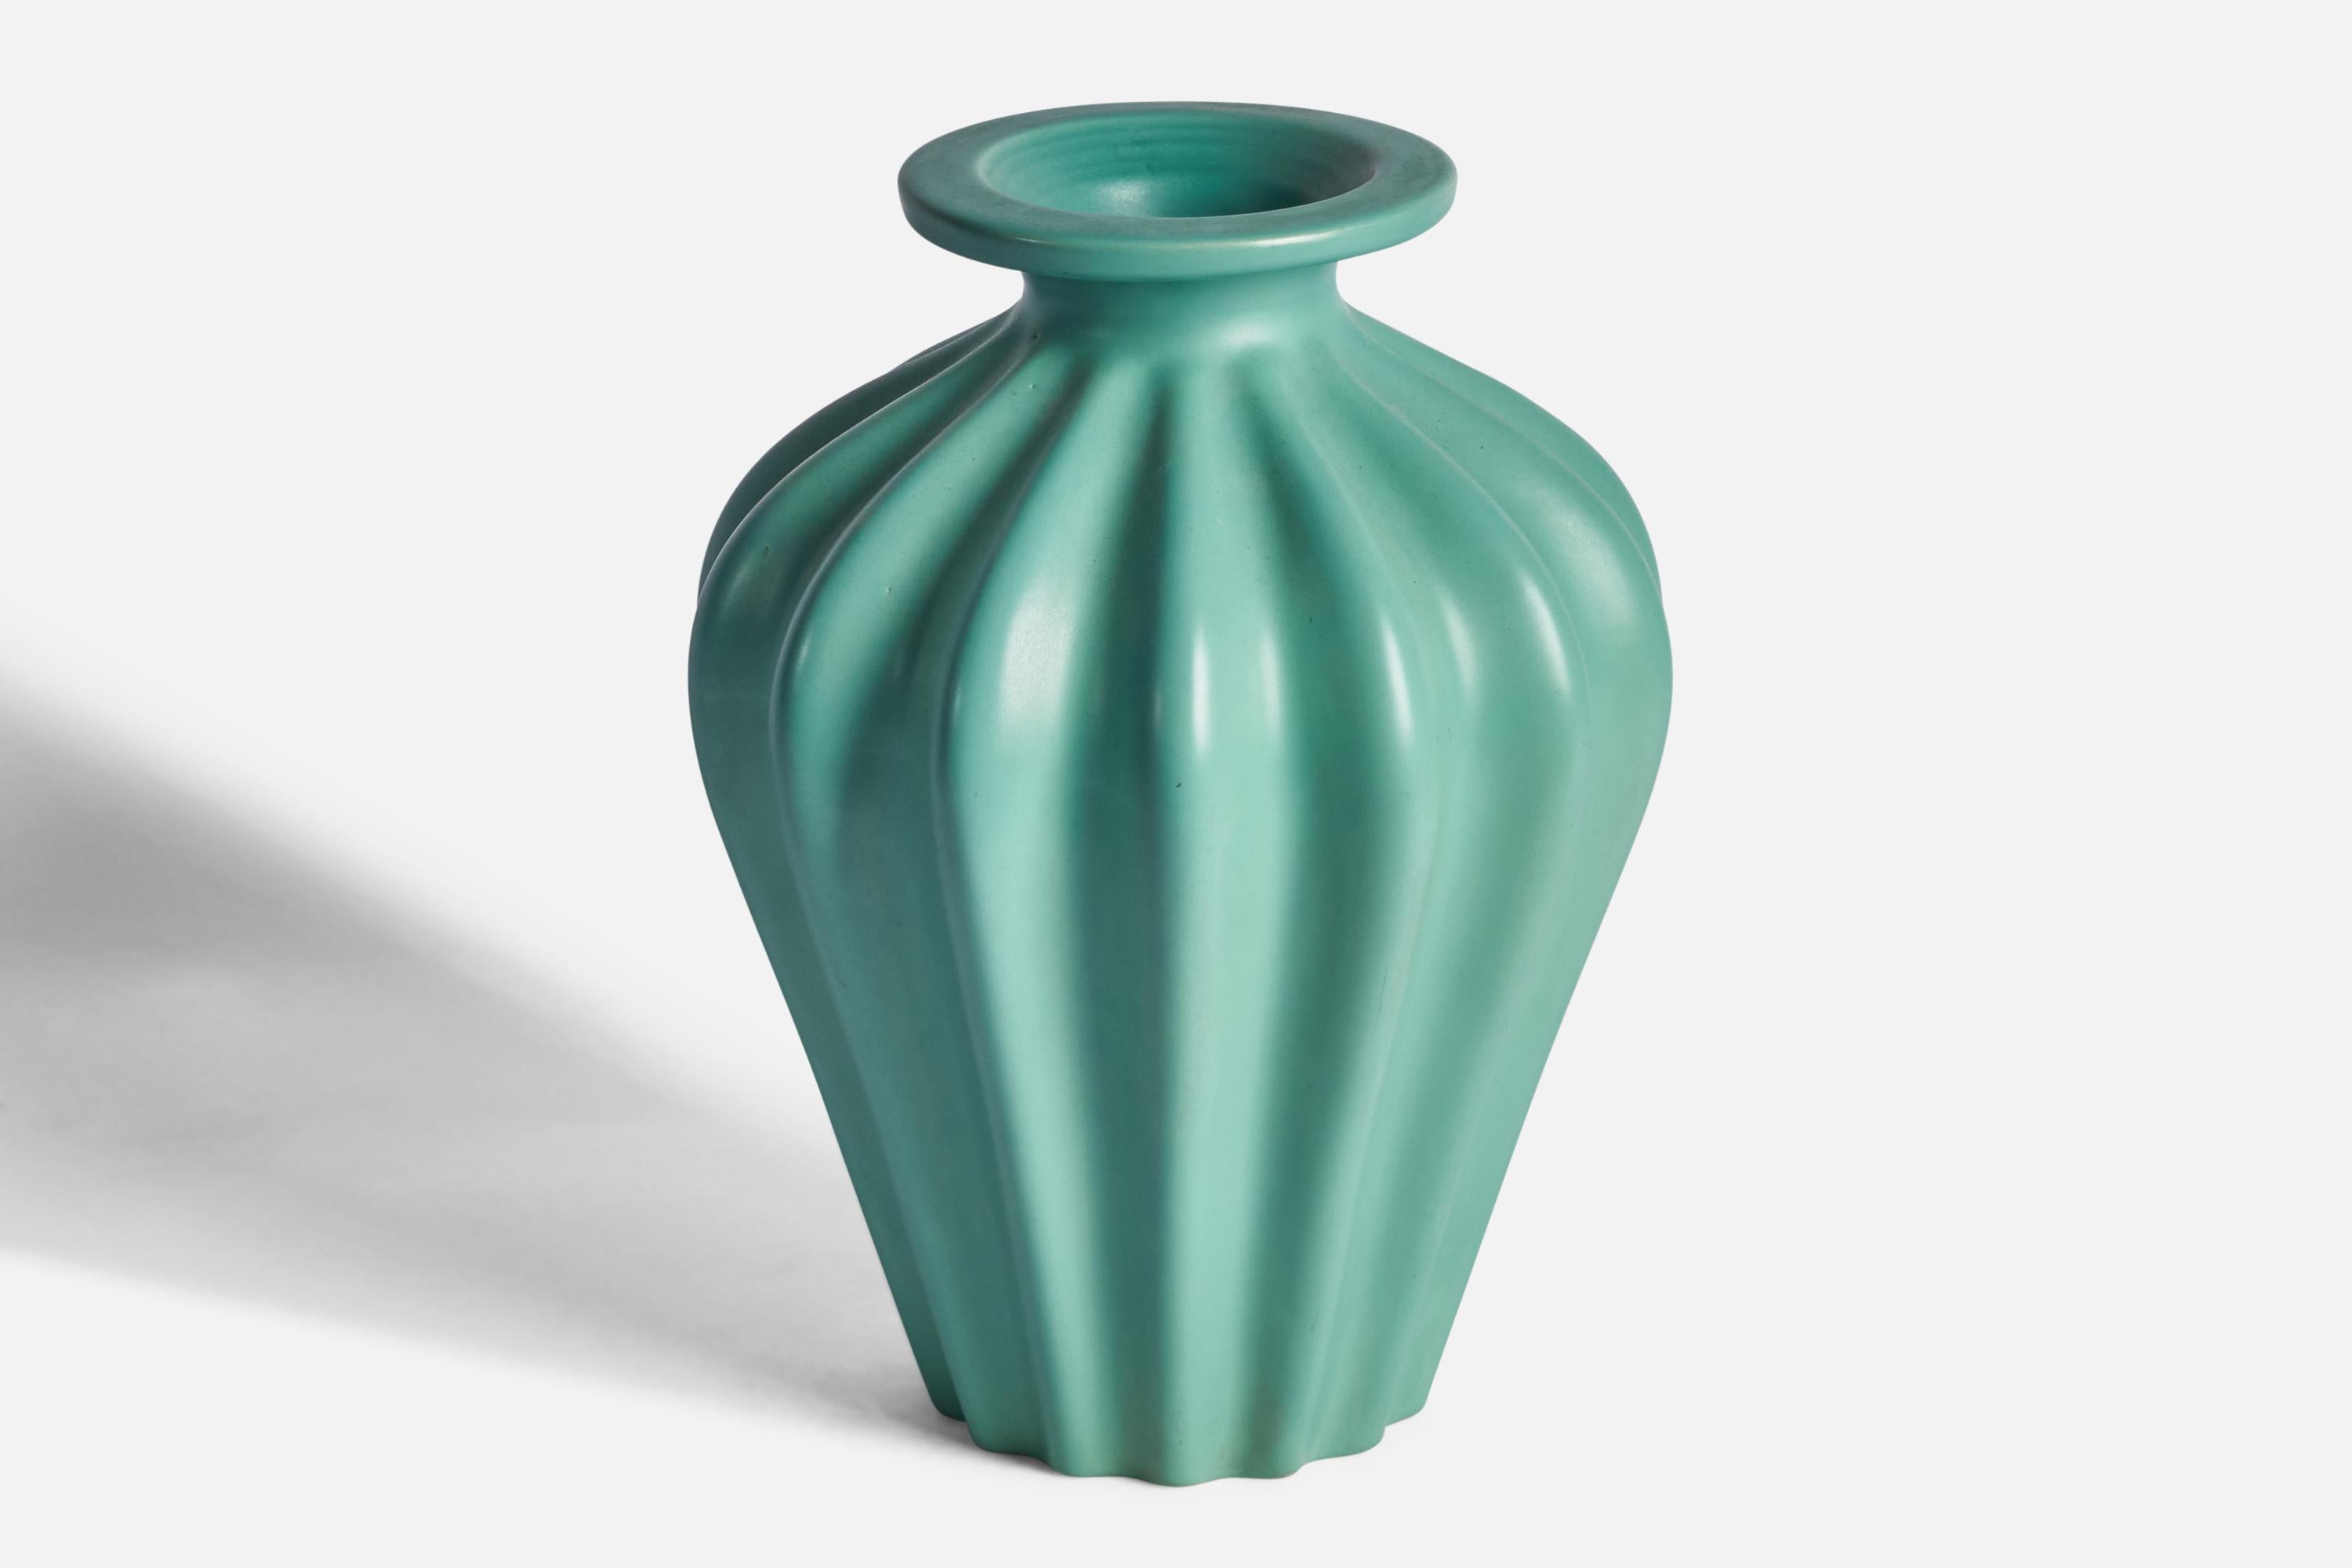 A sizeable fluted celadon green-glazed earthenware vase designed and Ewald Dahlskog and produced by Bo Fajans, Sweden, 1930s.